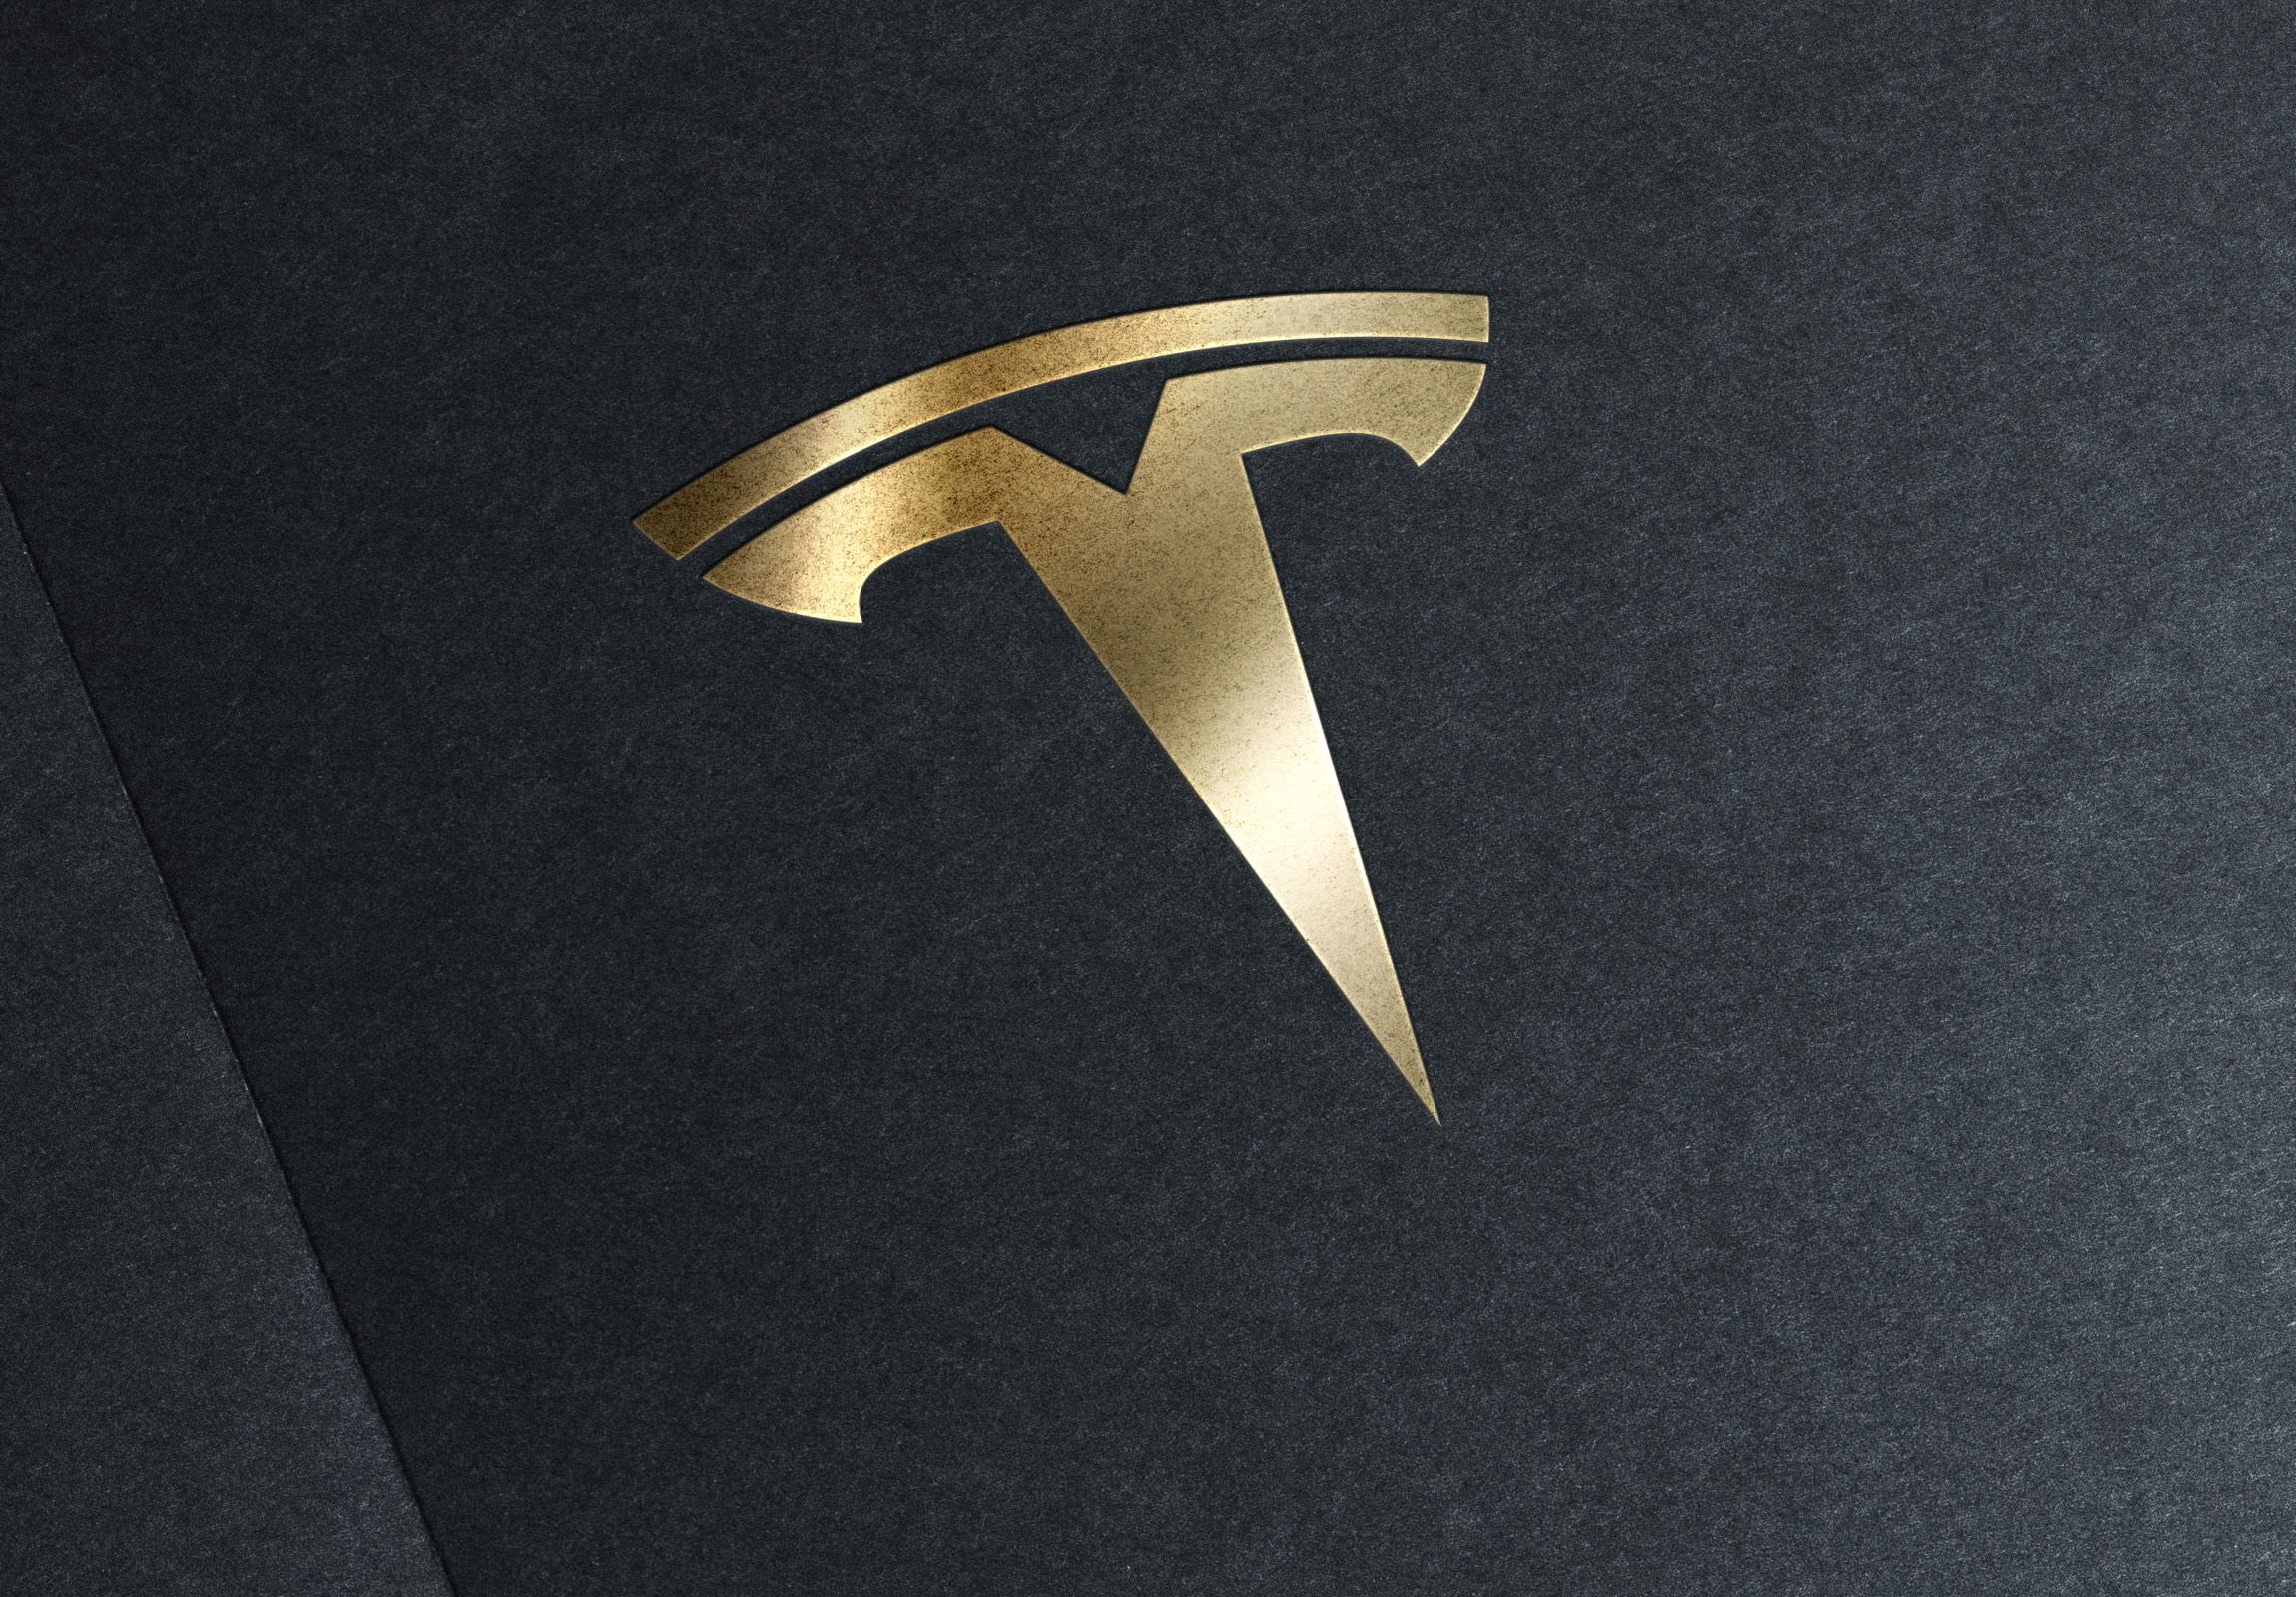 Download Tesla Logo iPhone Images In 4K Download Wallpaper 